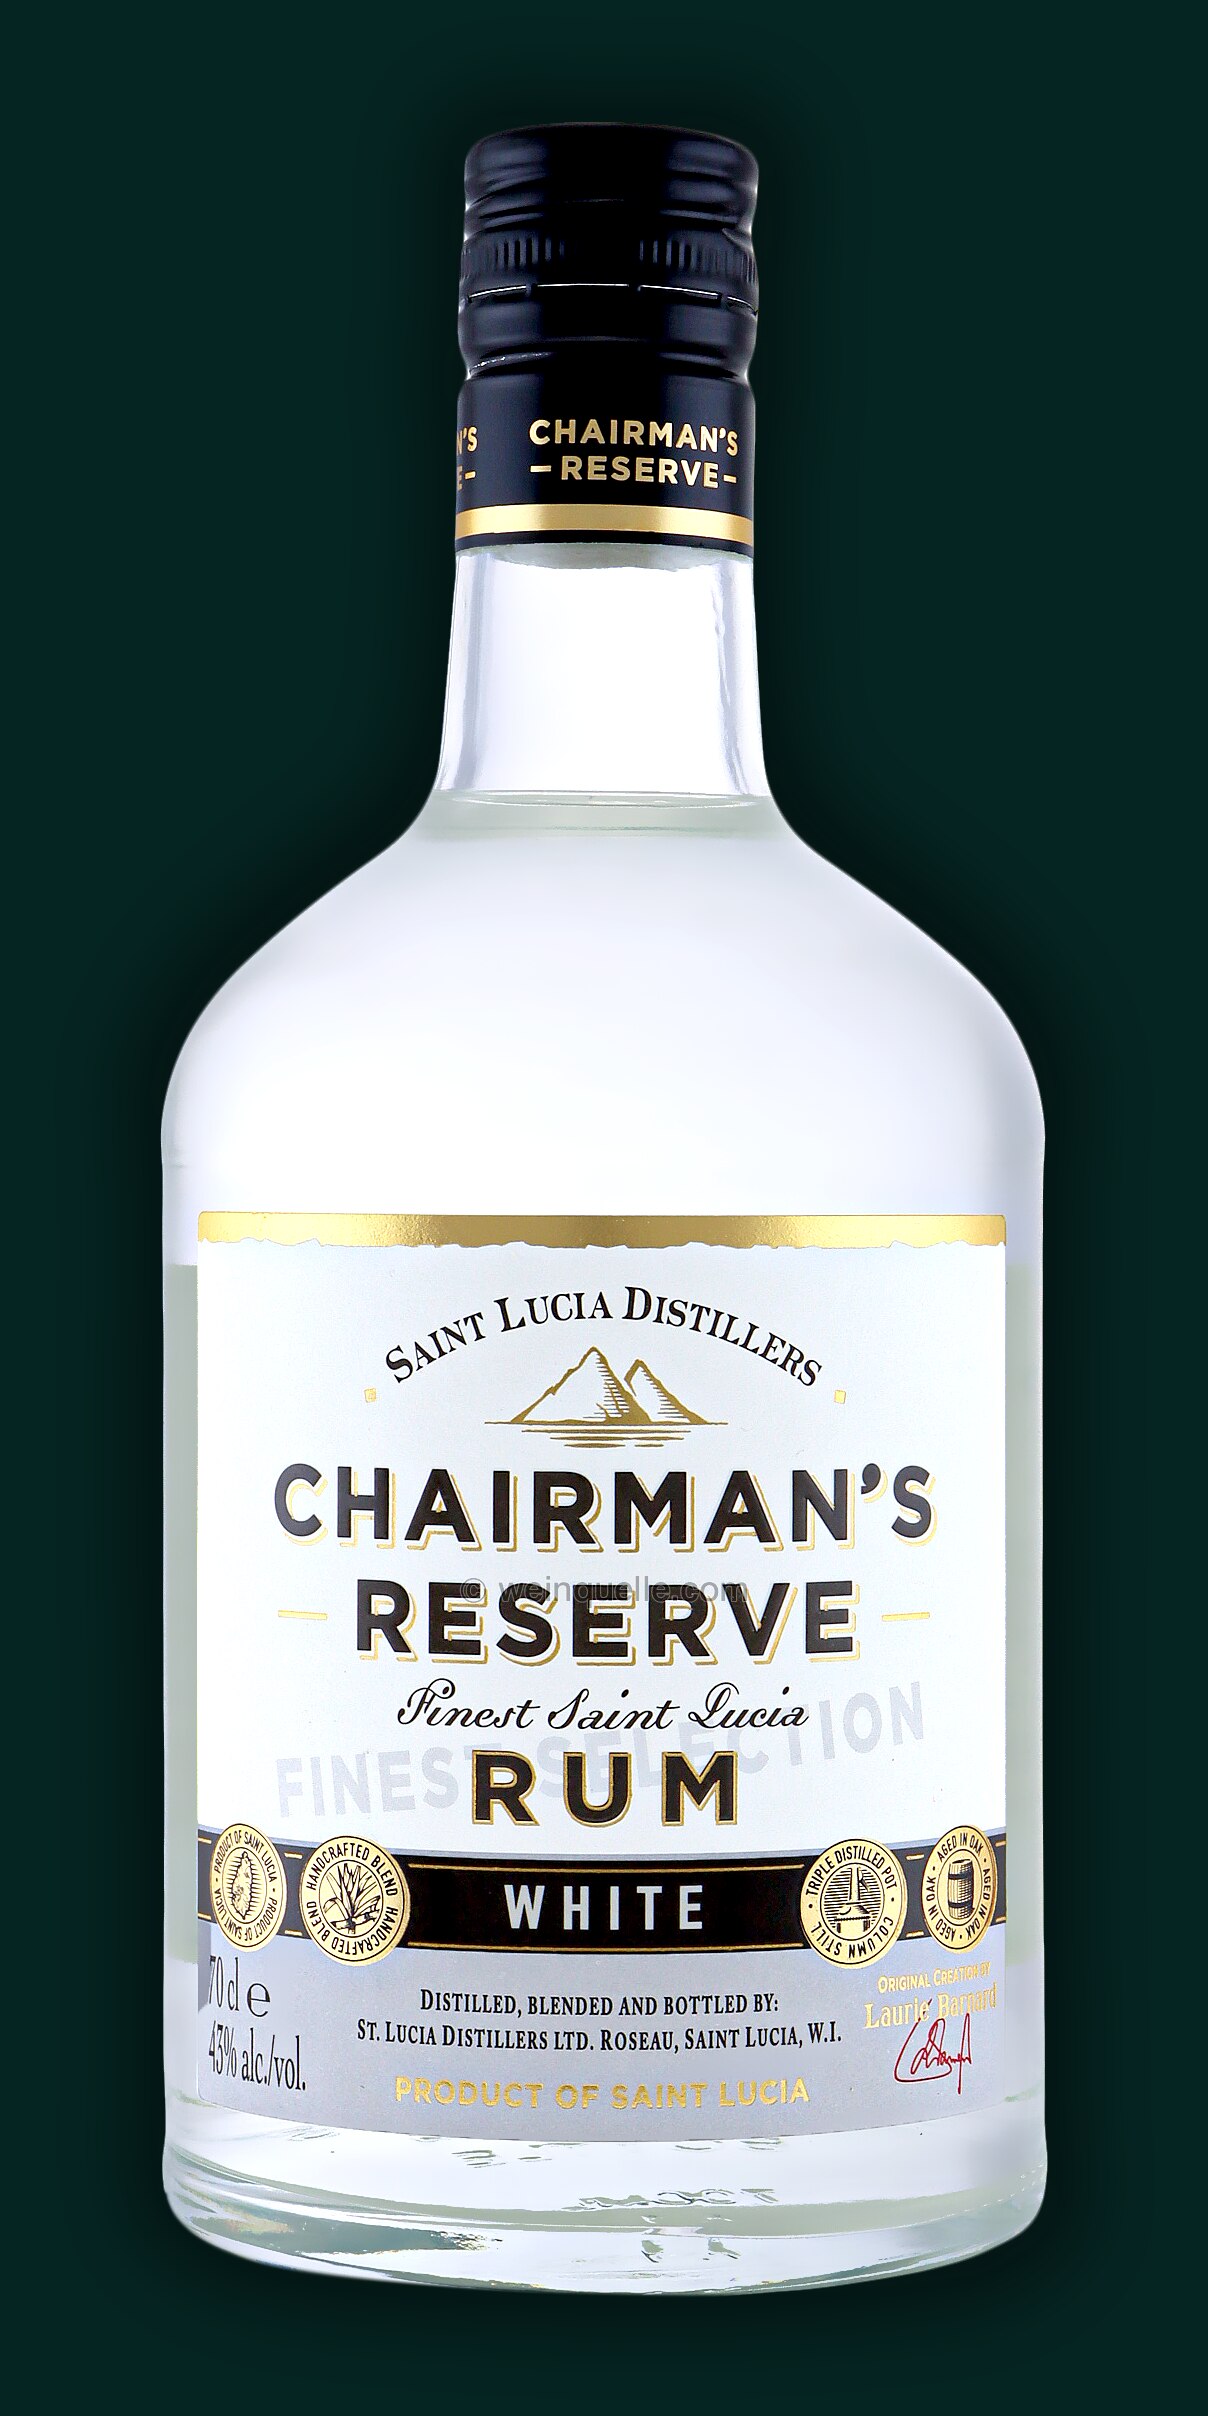 Chairman's Reserve White Rum from St. Lucia Distillers Limited - Weinquelle  Lühmann